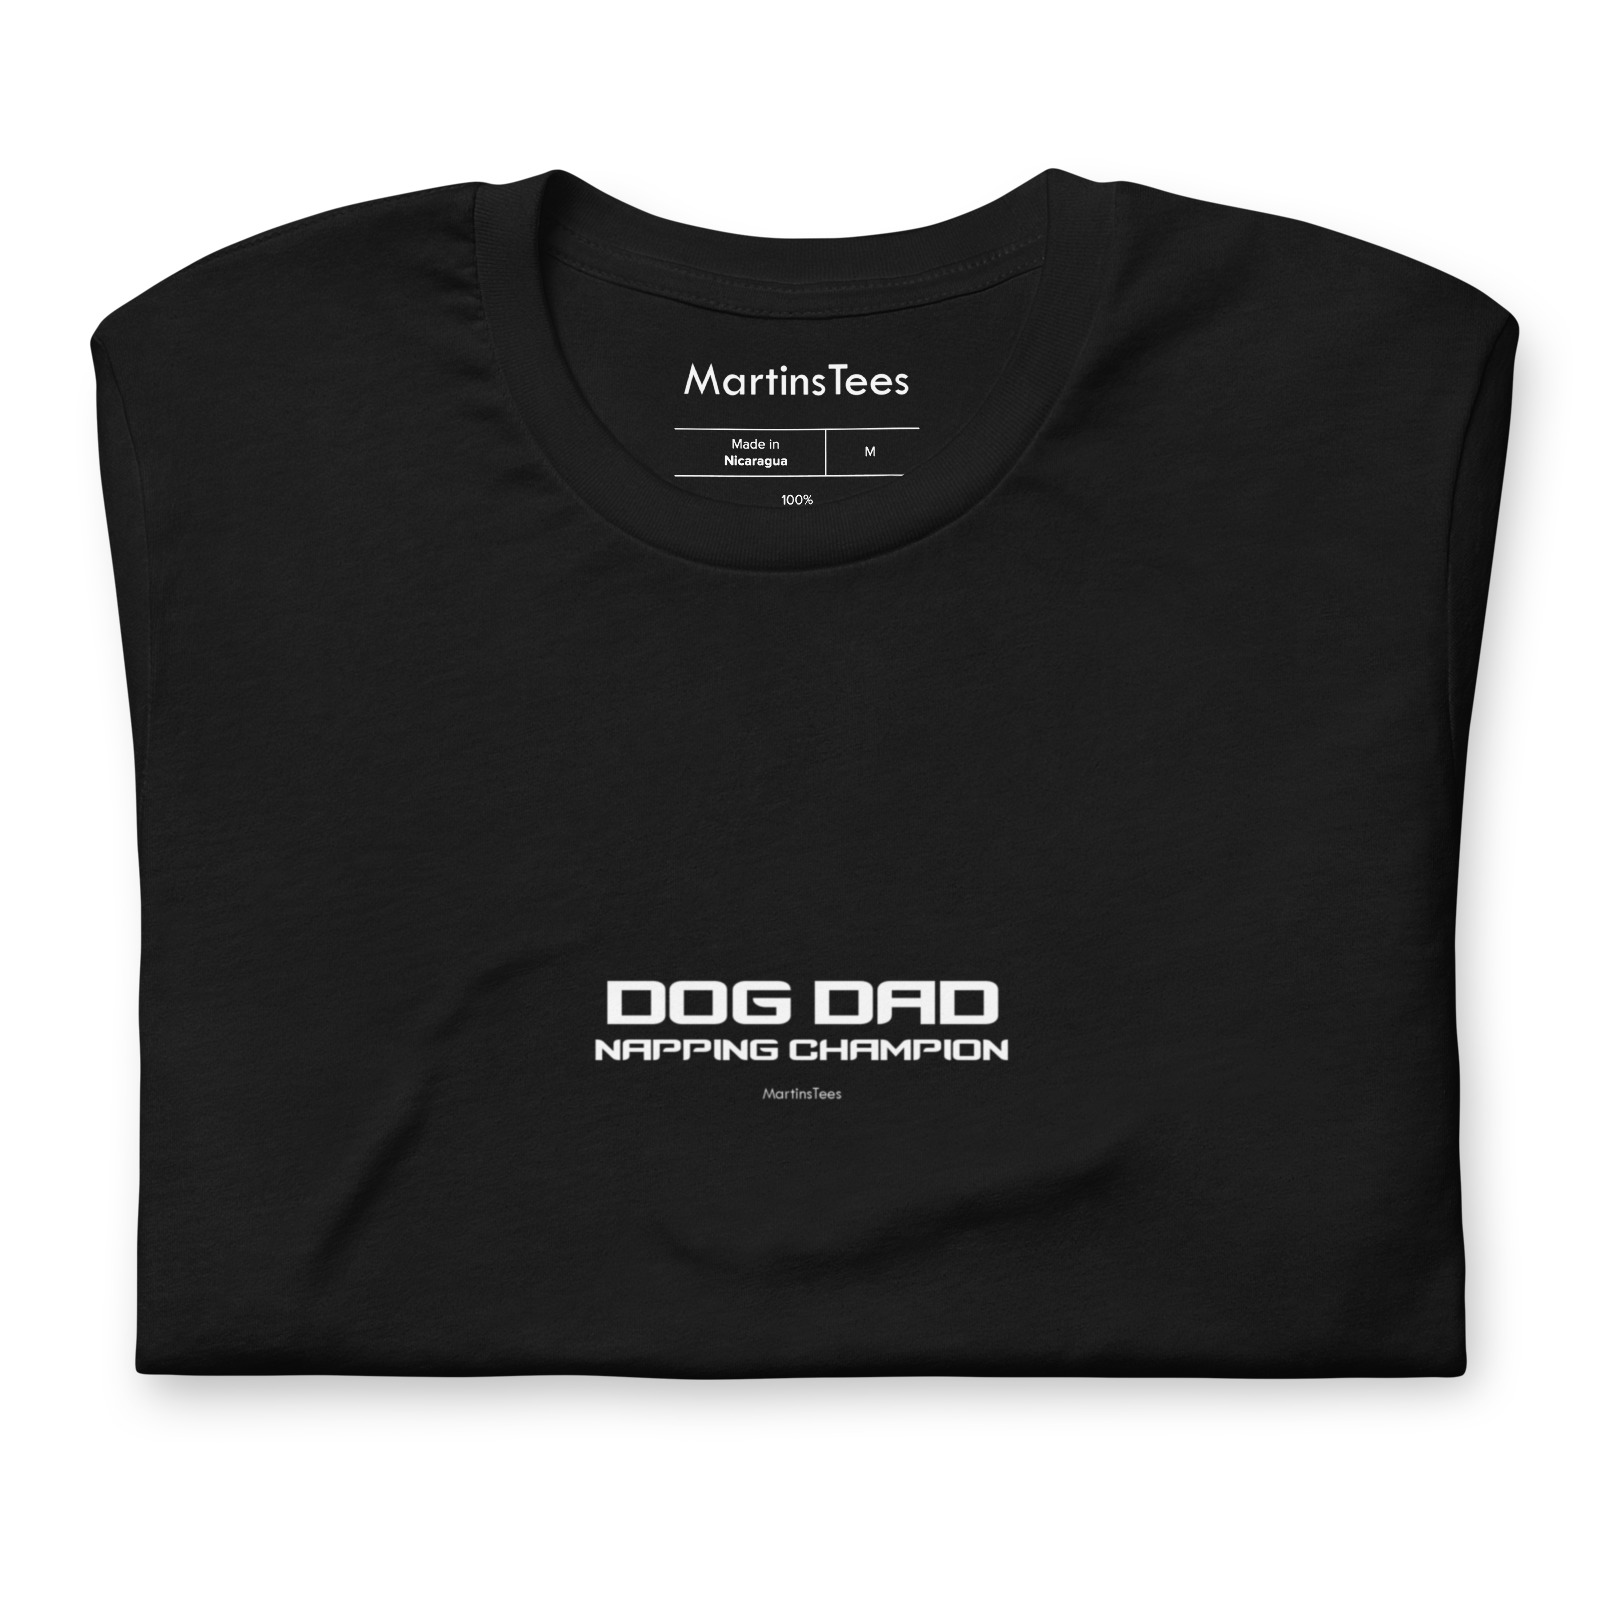 T-shirt: DOG DAD - NAPPING CHAMPION